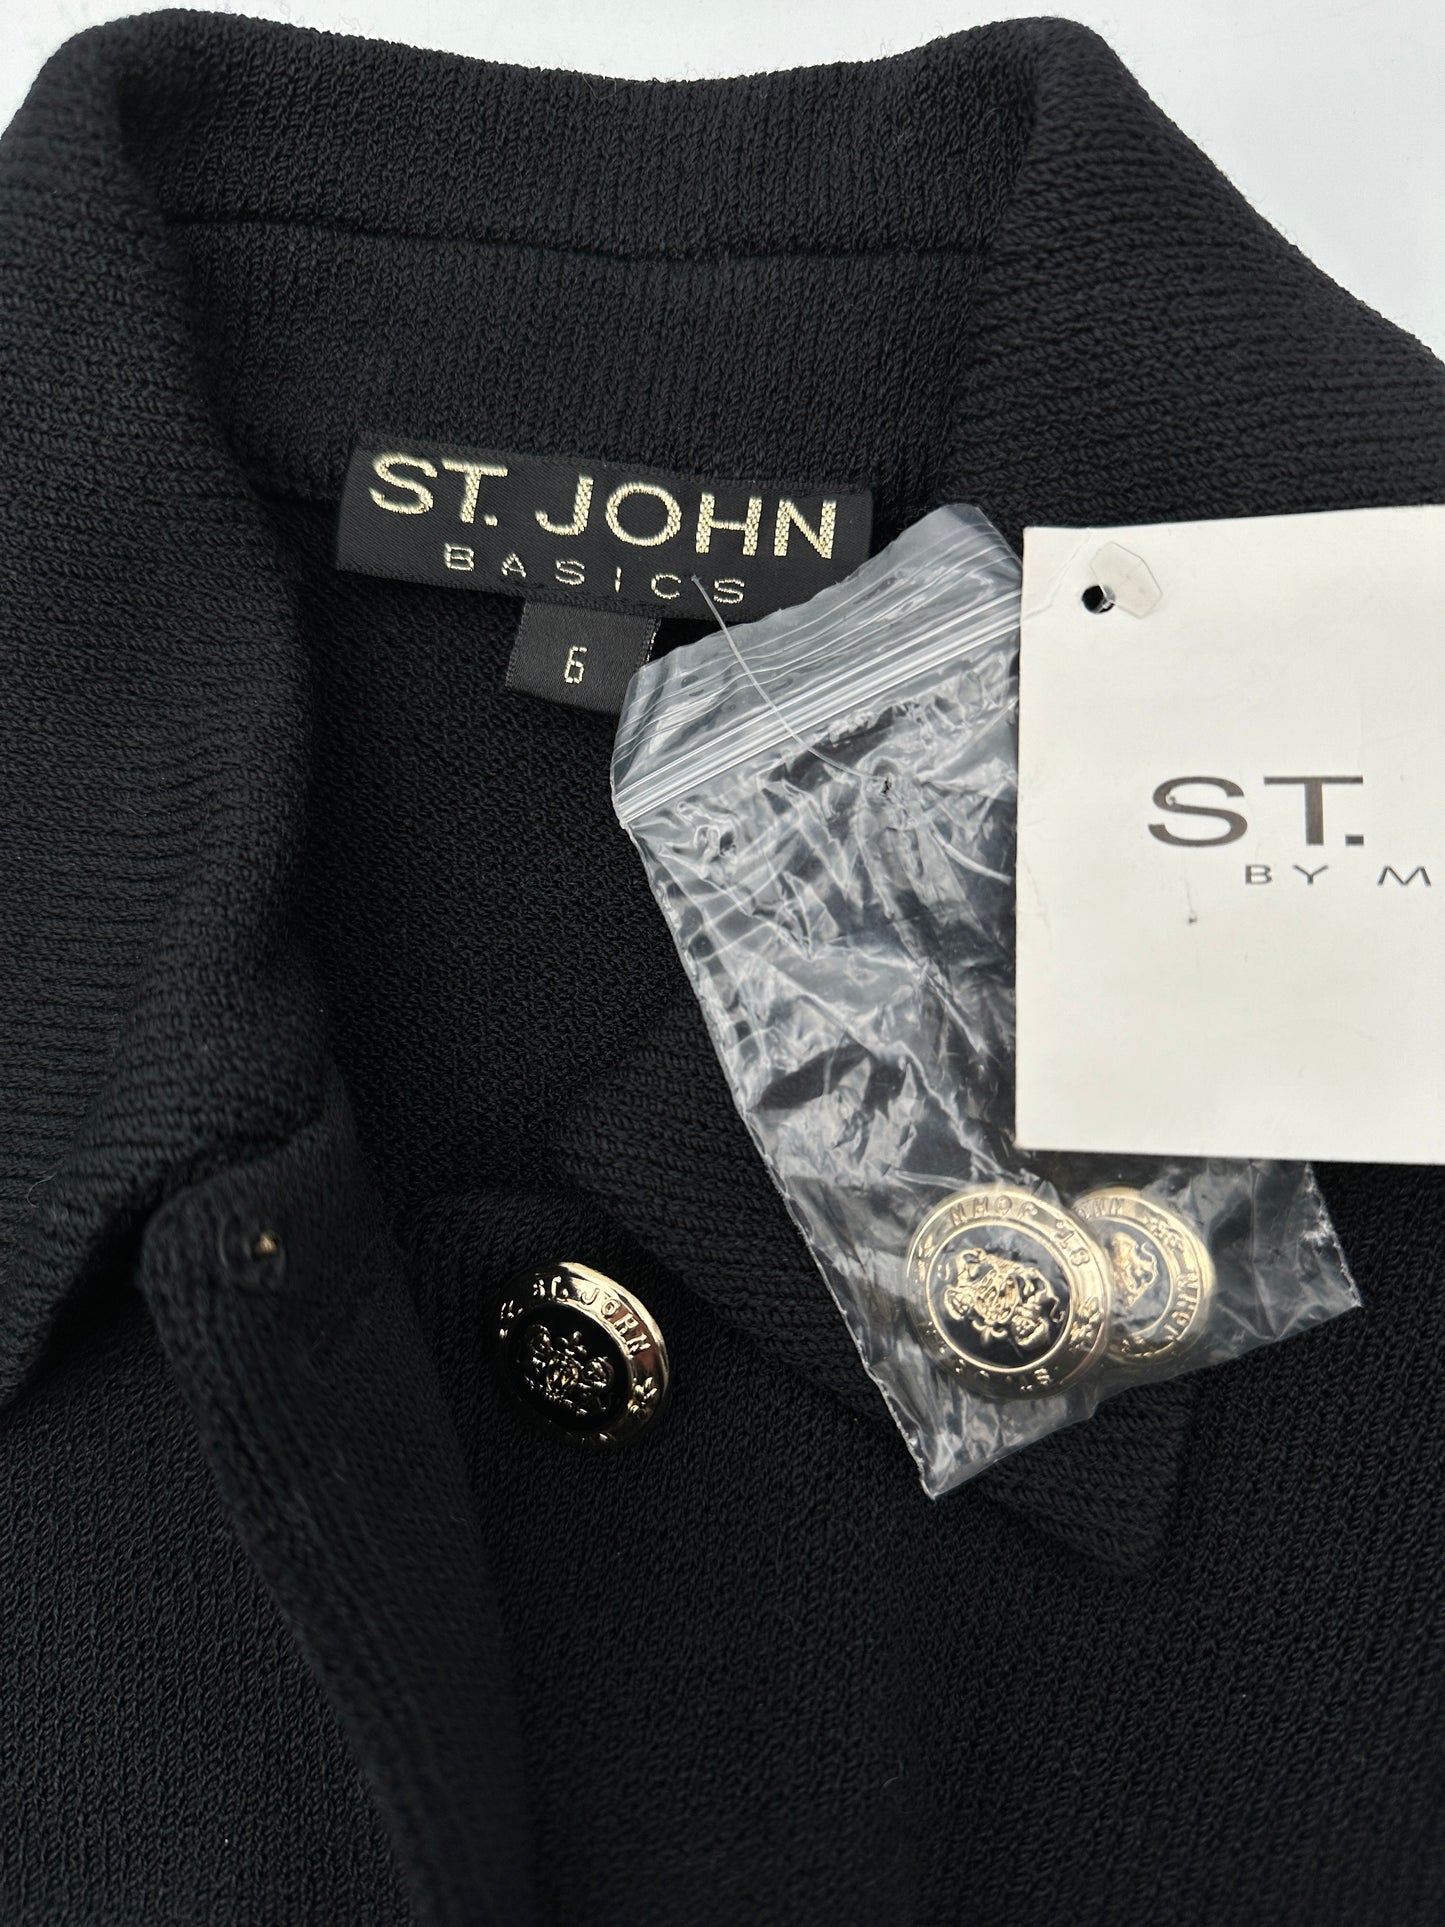 St. John Basics Size 6 Black Santana Knit Five-Button Jacket, new/NWT